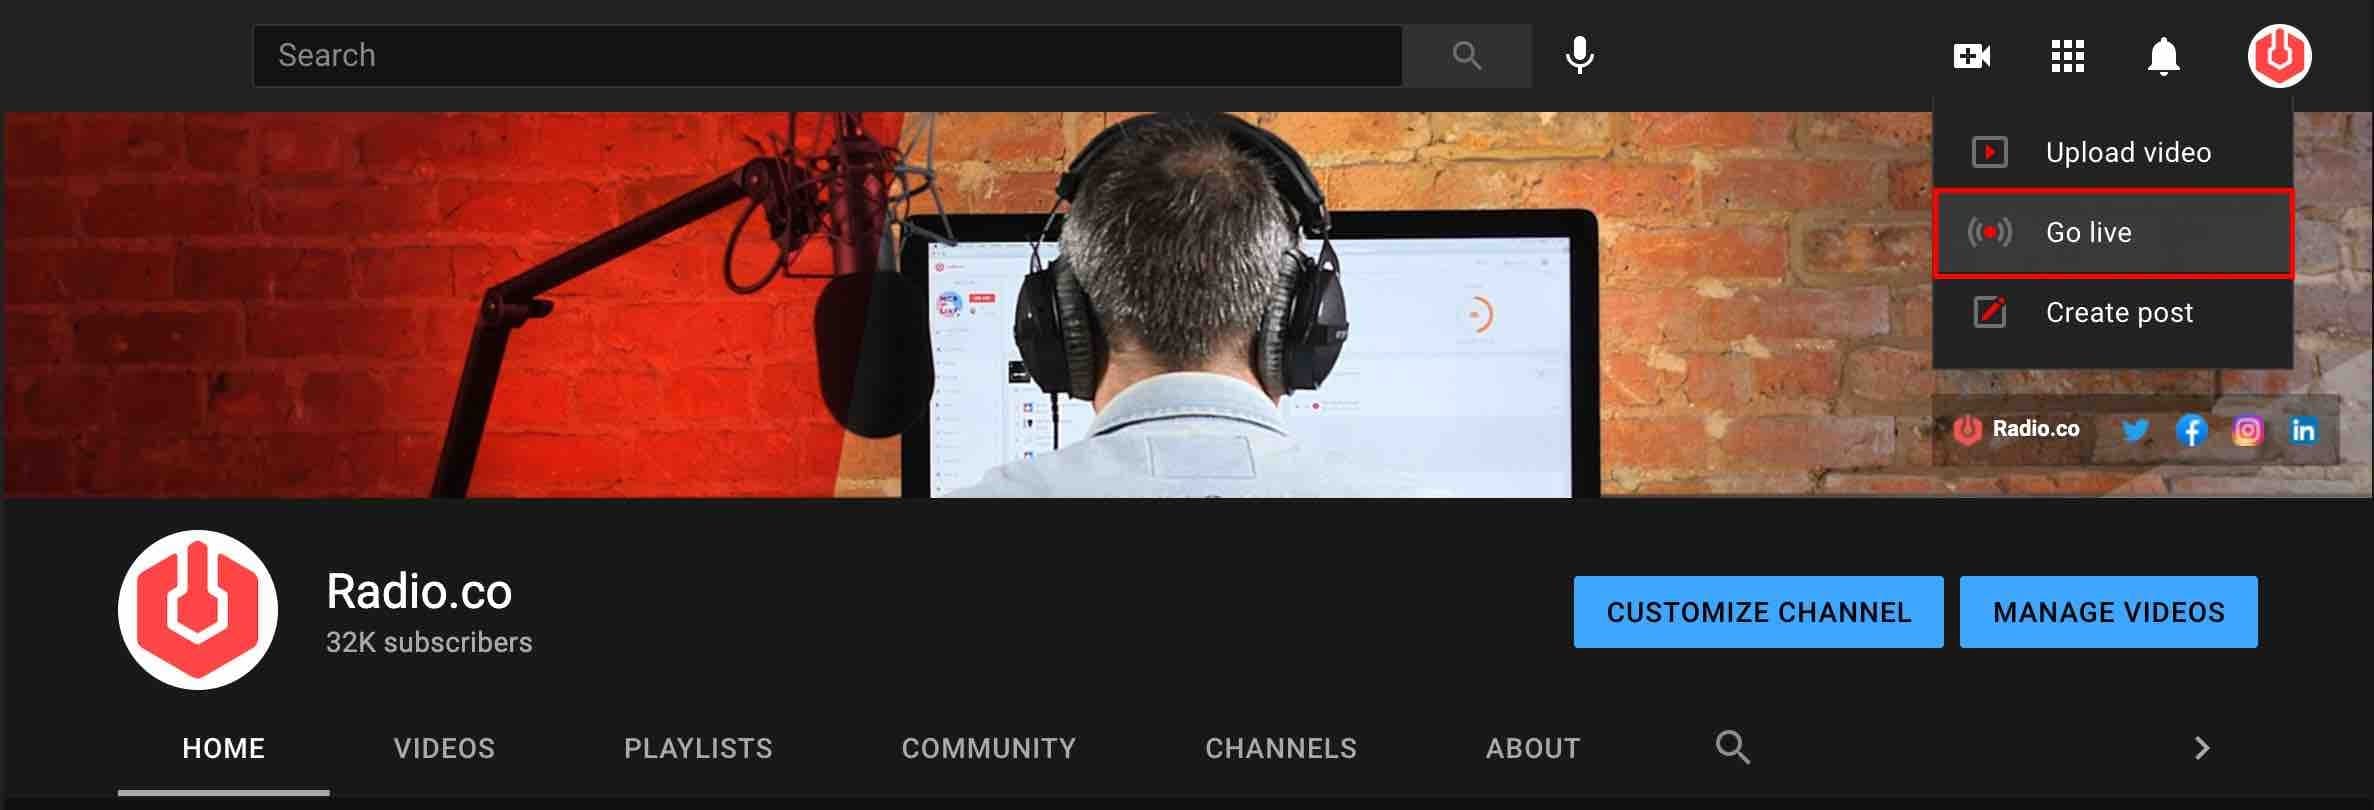 Humane Ale hand How to Broadcast Radio on YouTube | Radio.co